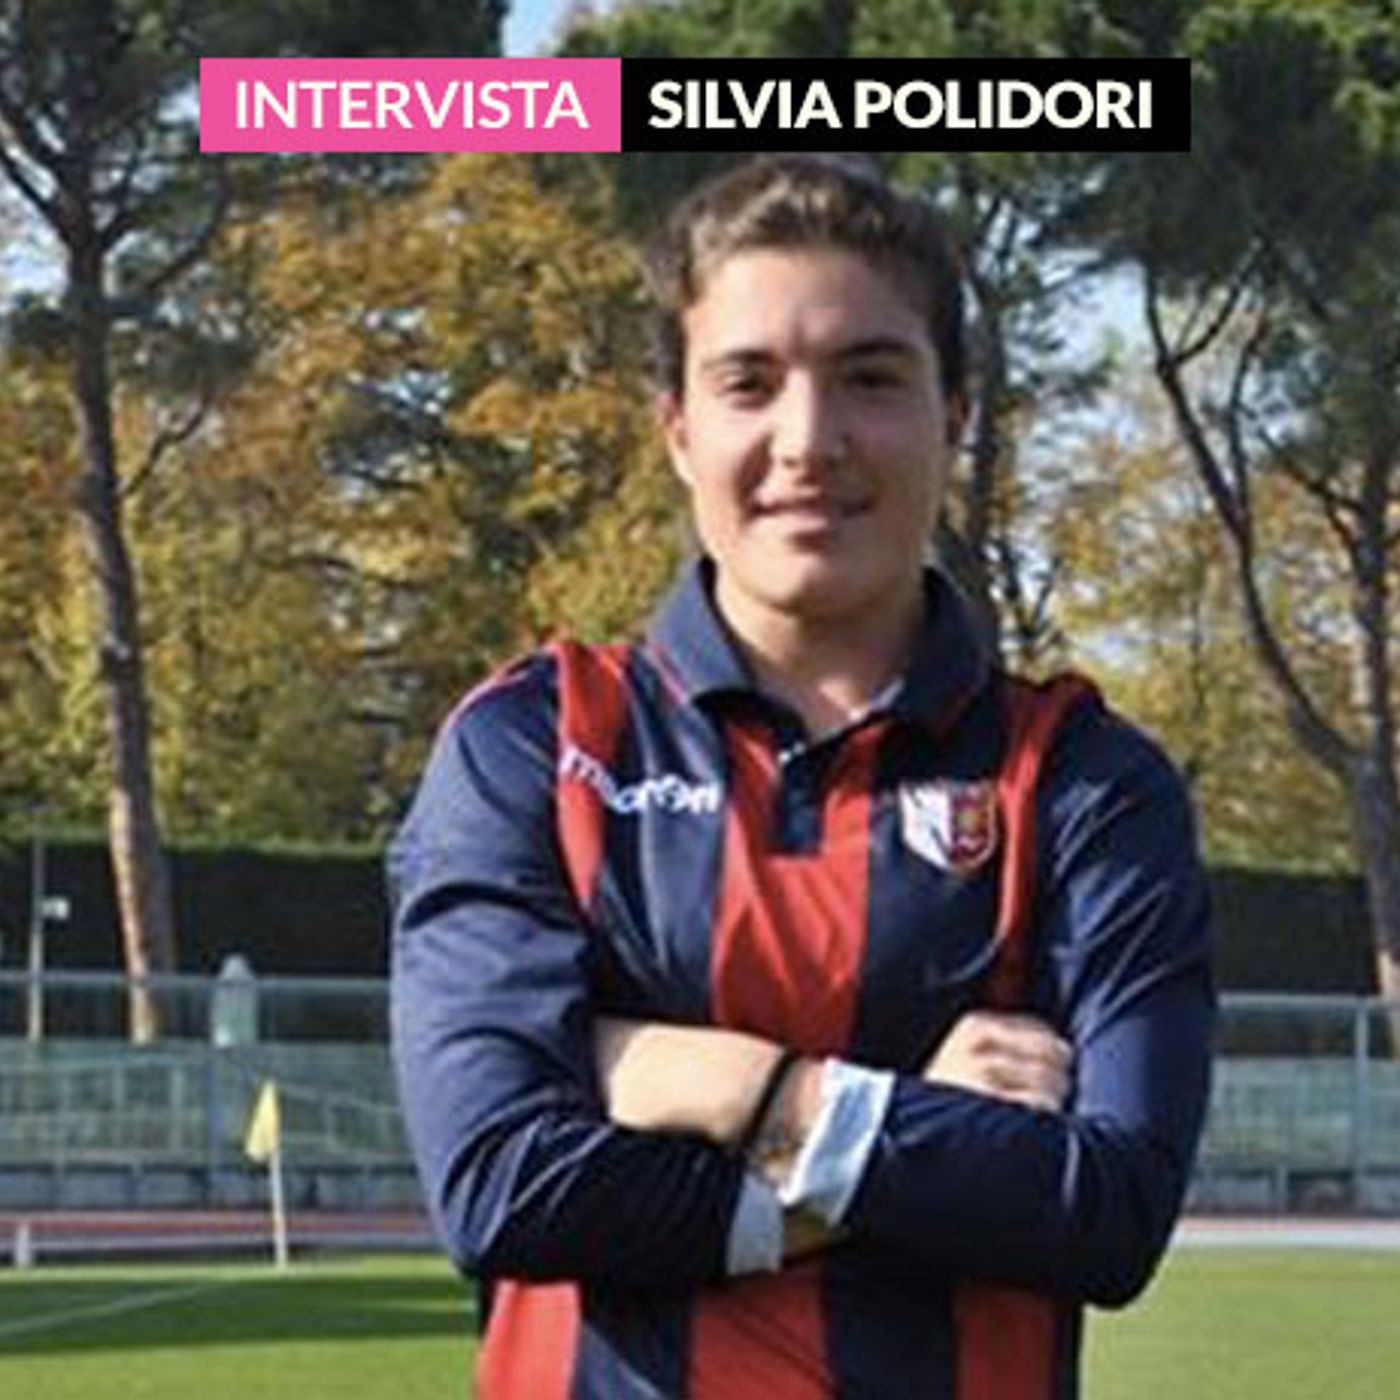 Intervista a Silvia Polidori